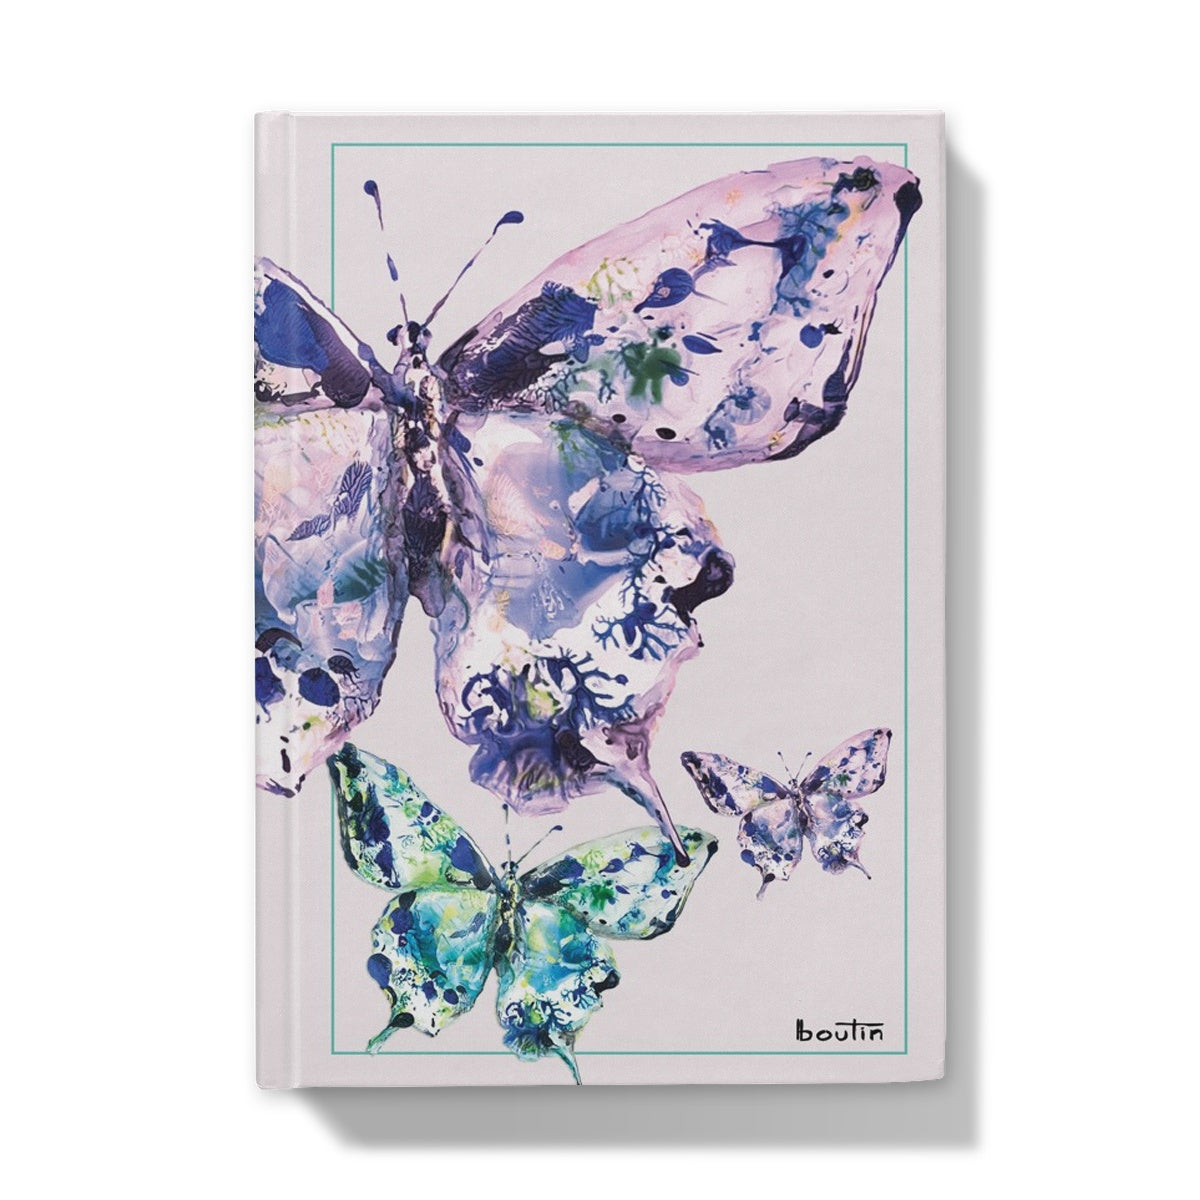 Lilac butterflies - Notebook by the artist Boutin